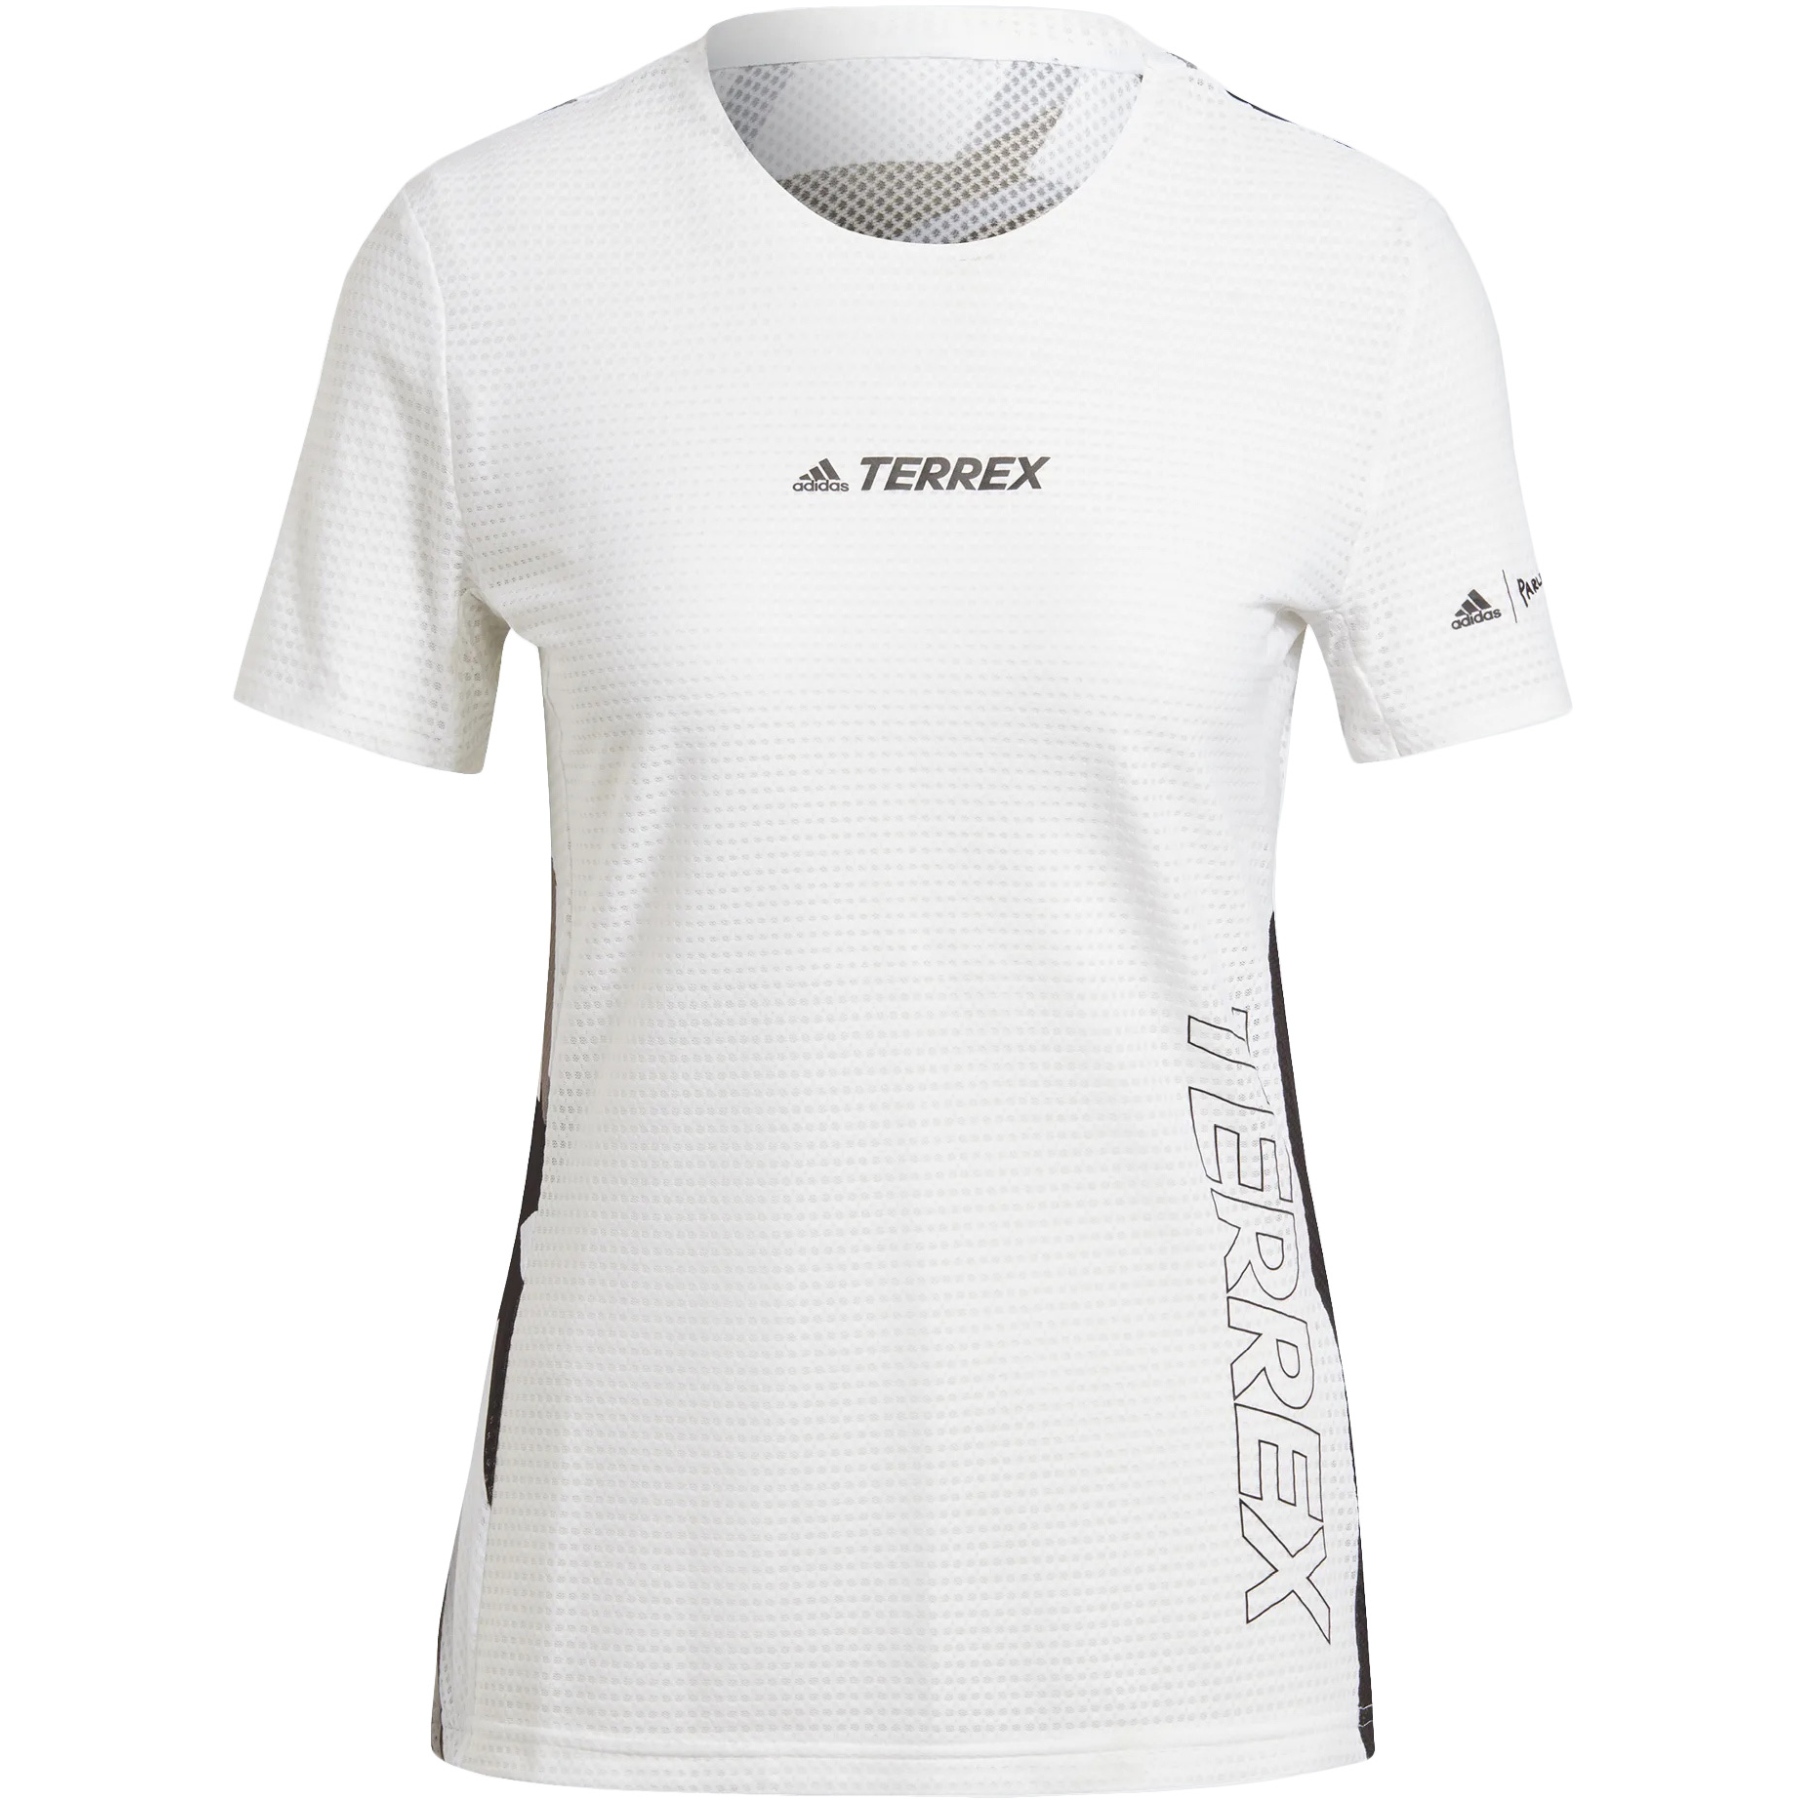 Image of adidas Women's TERREX Parley Agravic Trail Running Pro Tee Shirt - white/black GL1211